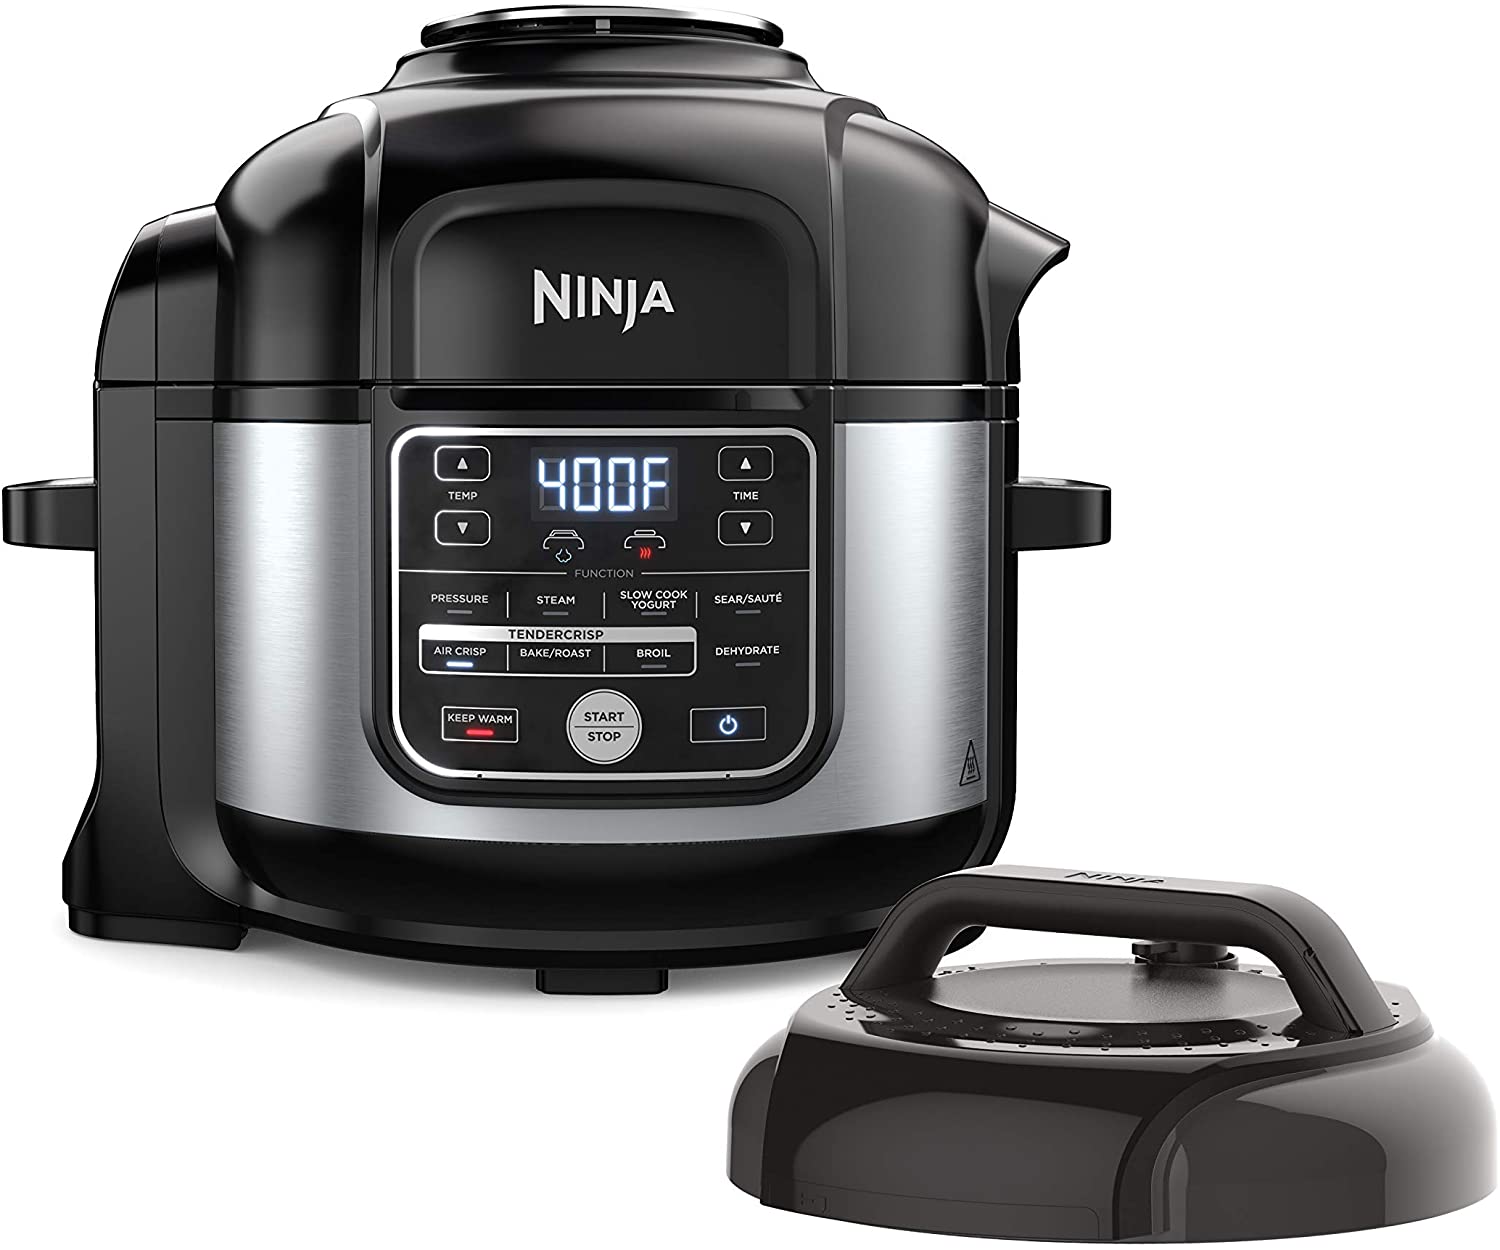 Ninja OS301 Foodi 6.5-Quart 10-In-1 Pressure Cooker + Air Fryer w/ Nesting Broil Rack (Stainless Steel) $118.99 + Free Shipping via Amazon